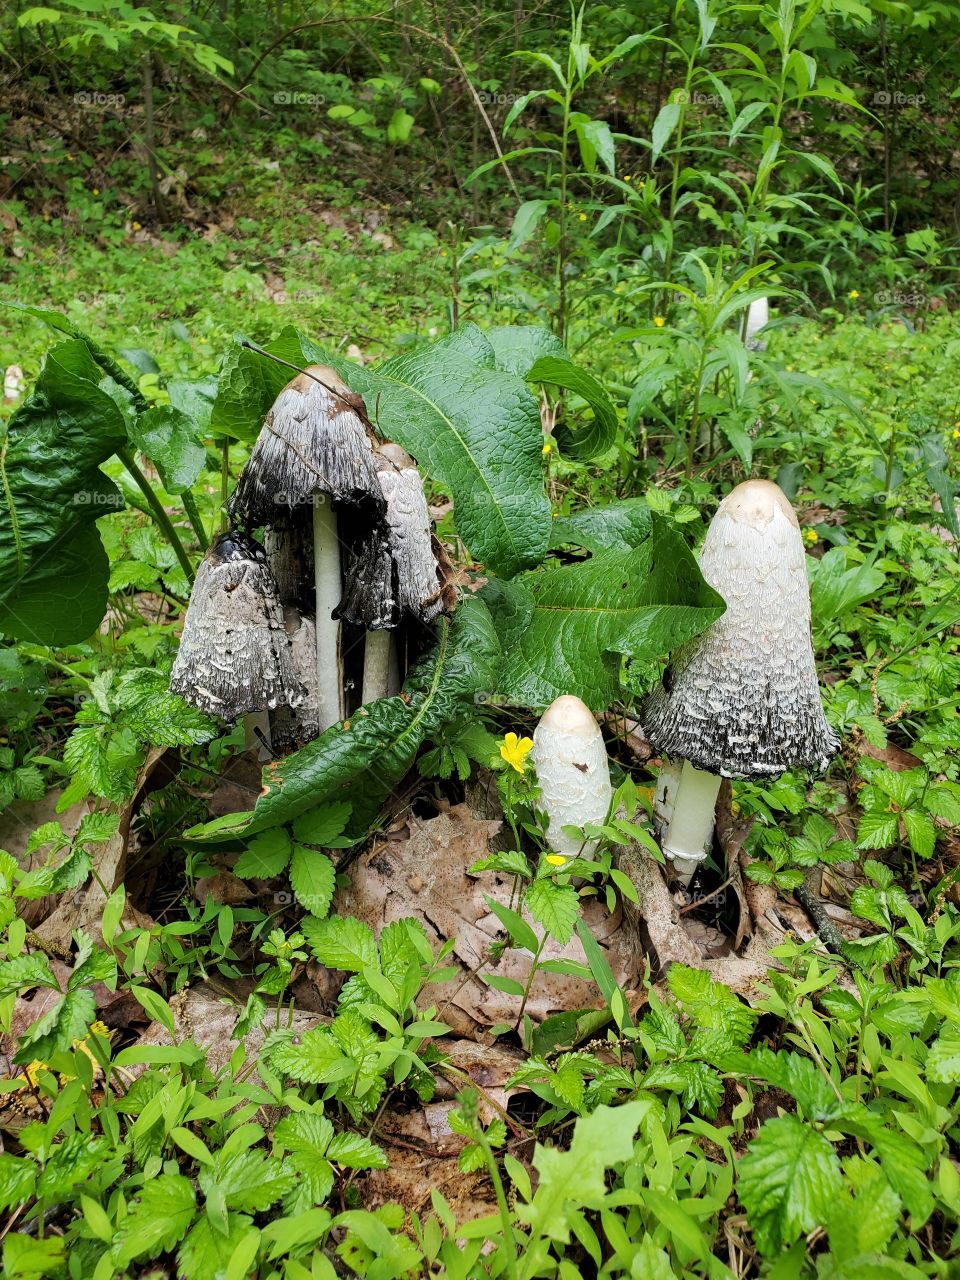 multiple mushrooms grass green woods